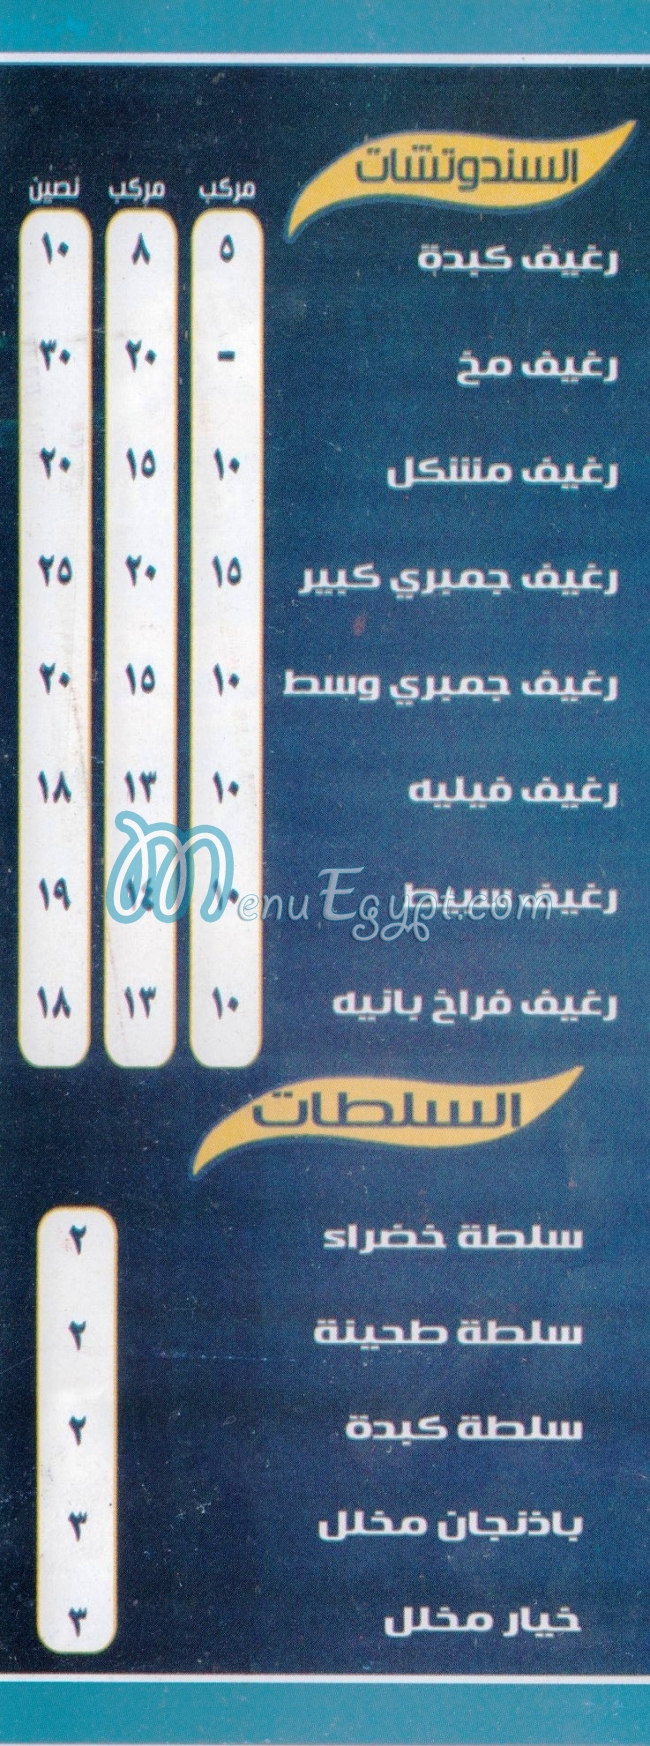 El Sharkaawy Awald Abo El Maal delivery menu